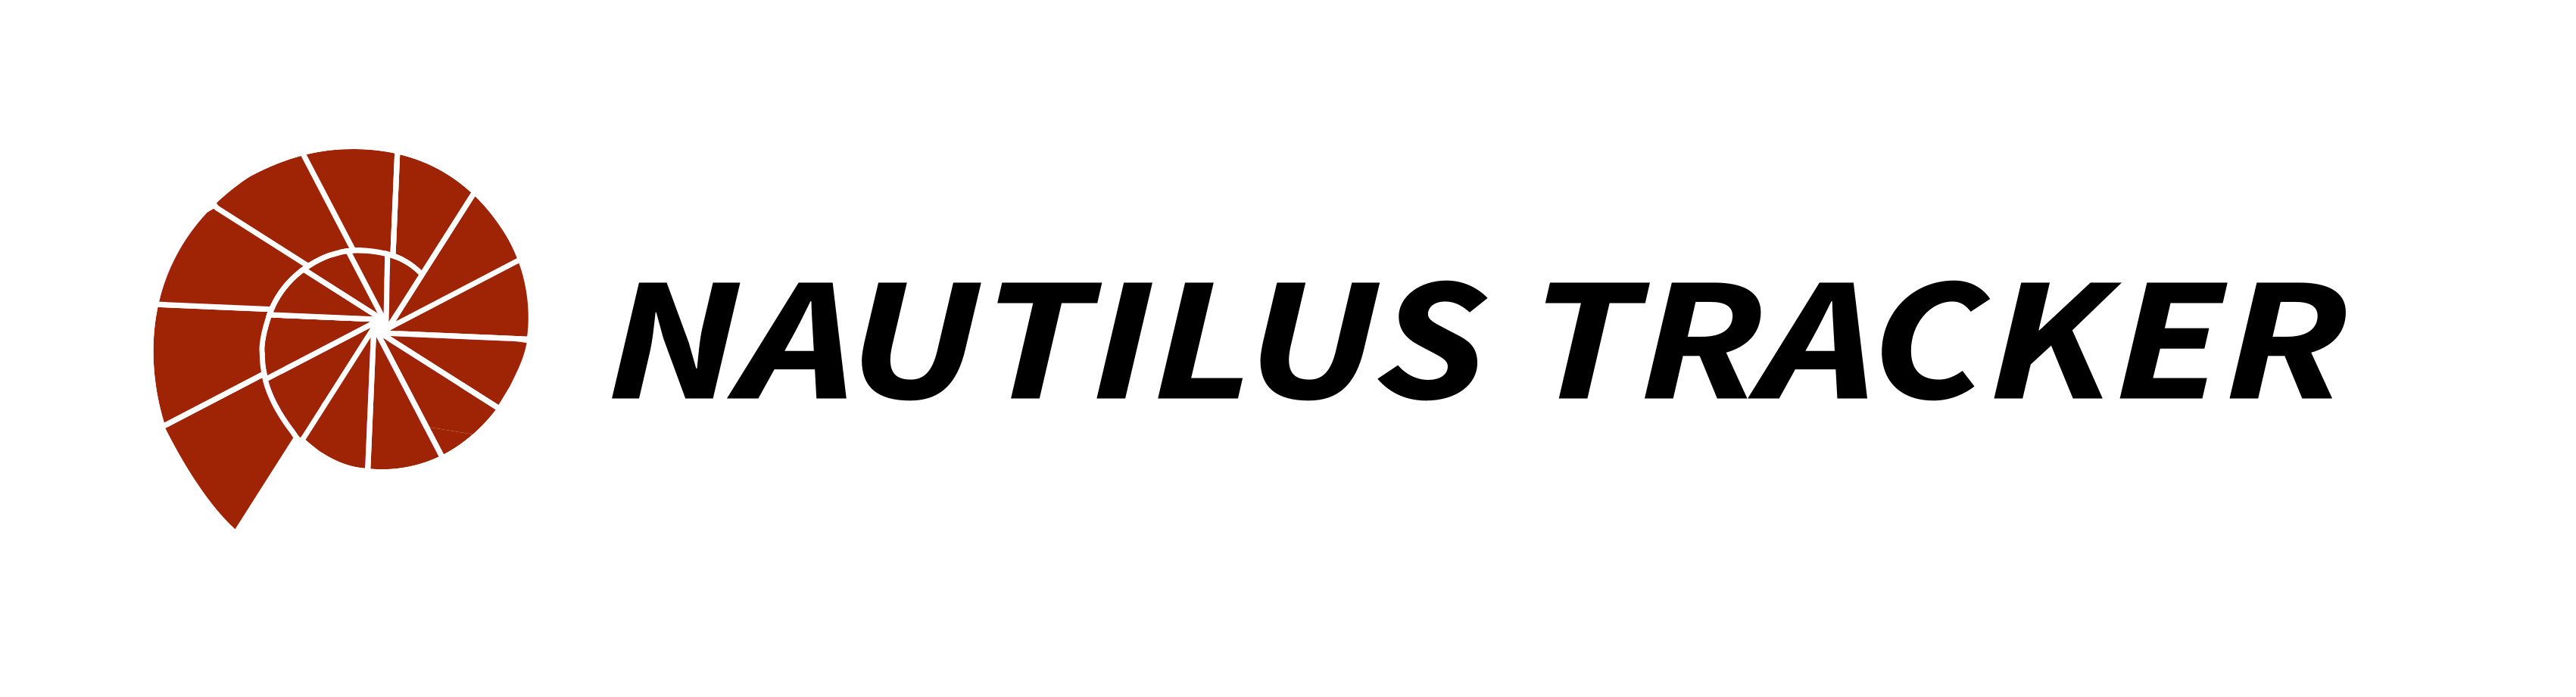 Nautilus Tracker Software - purveyors of kick-ass software and content